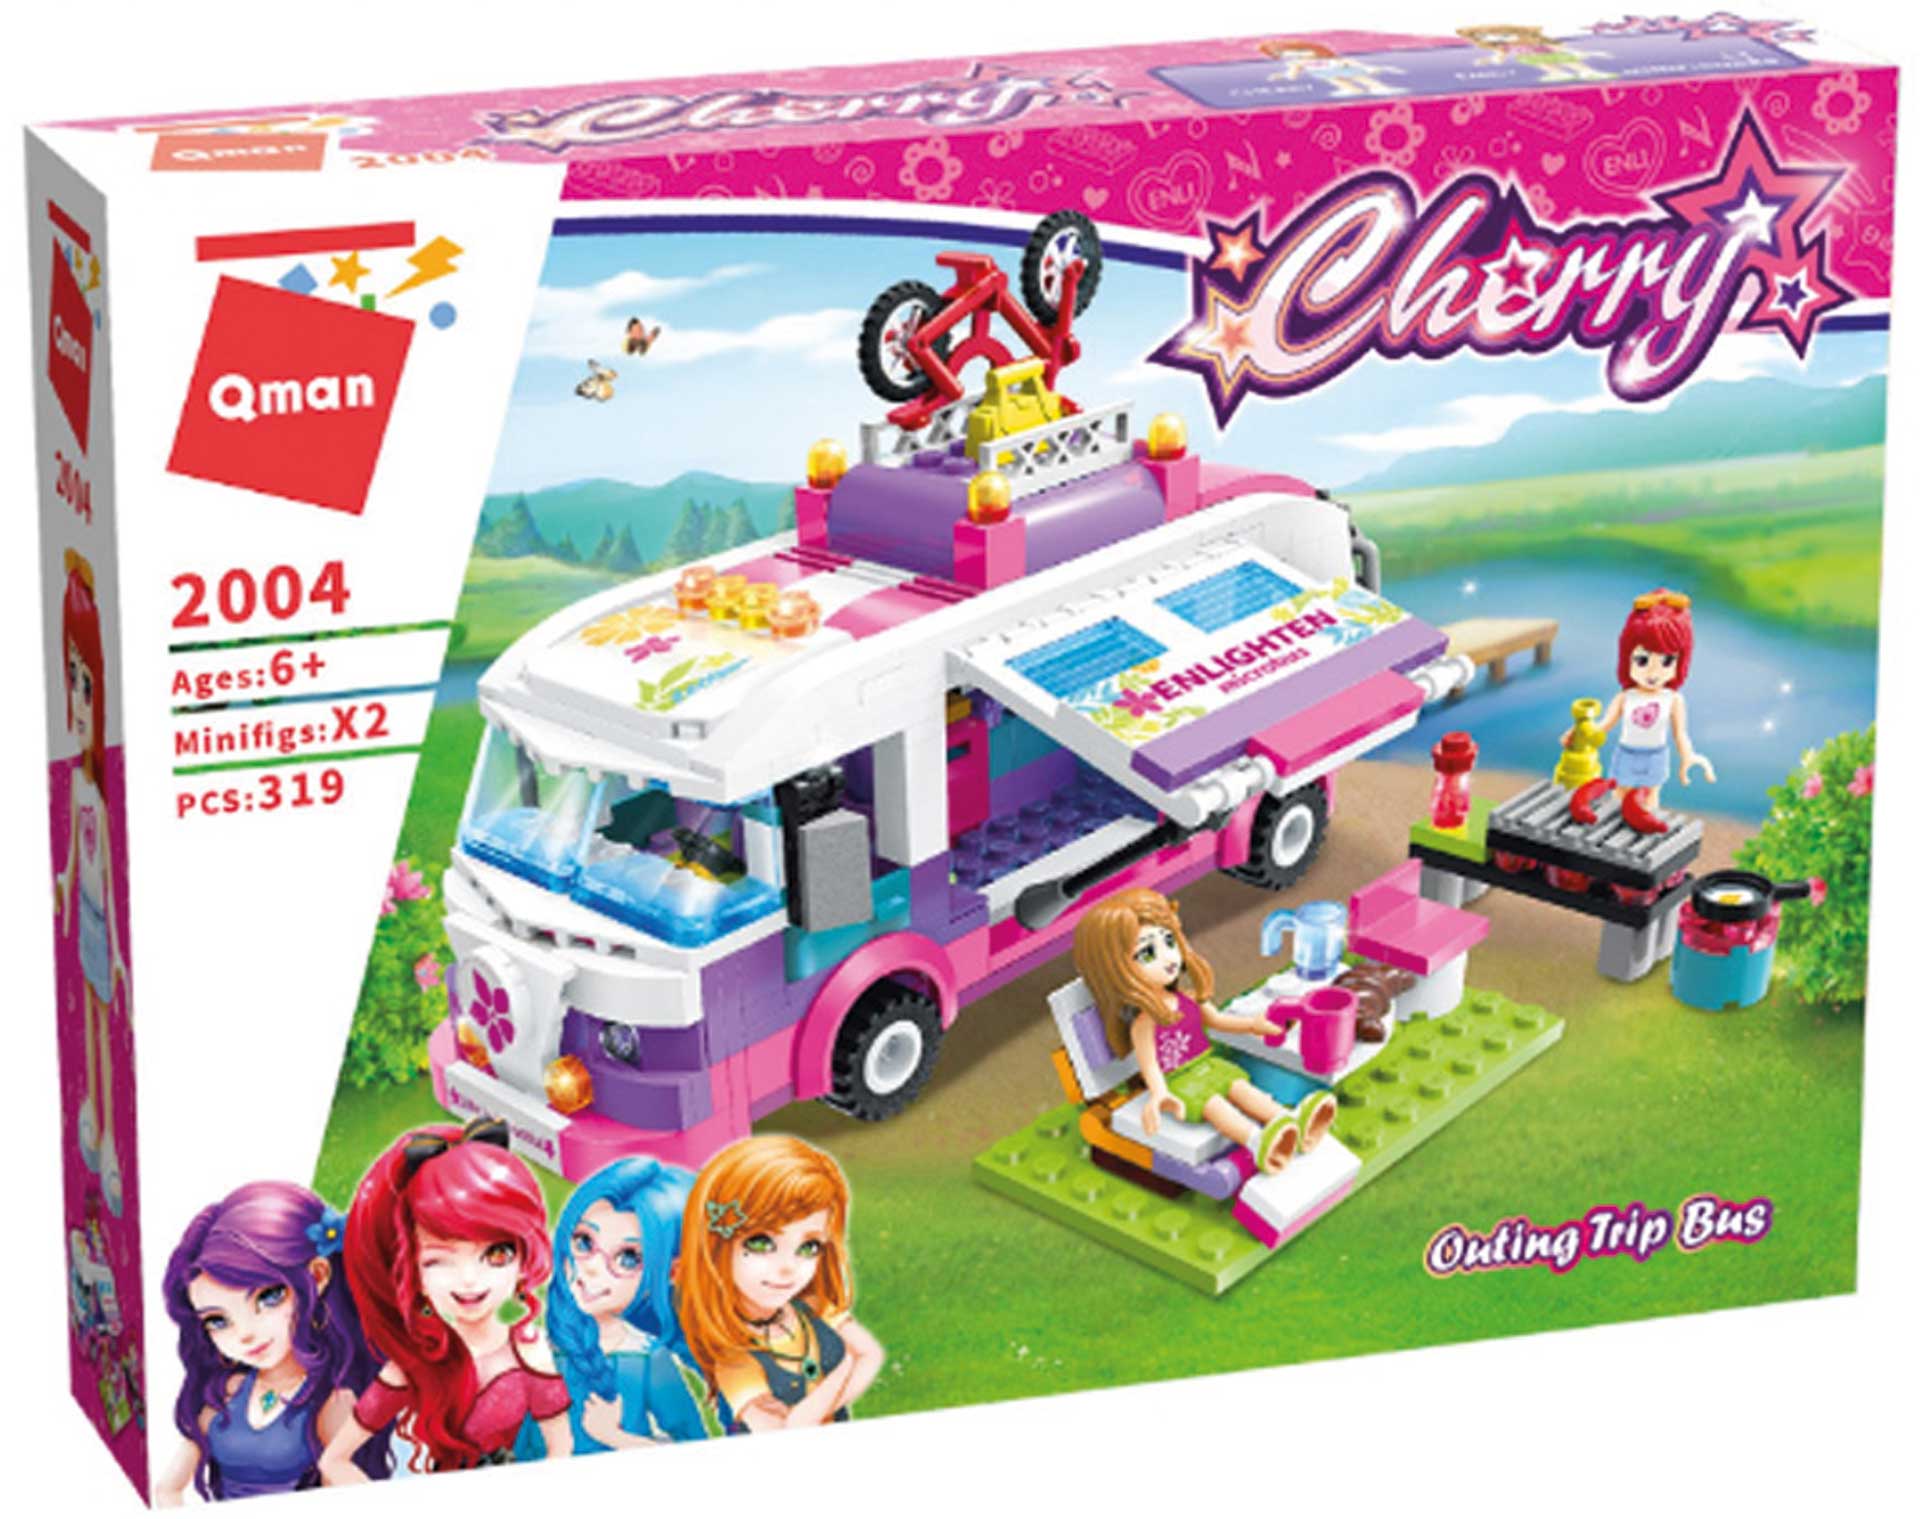 QMan Cherry Camping Bus (319 parts)